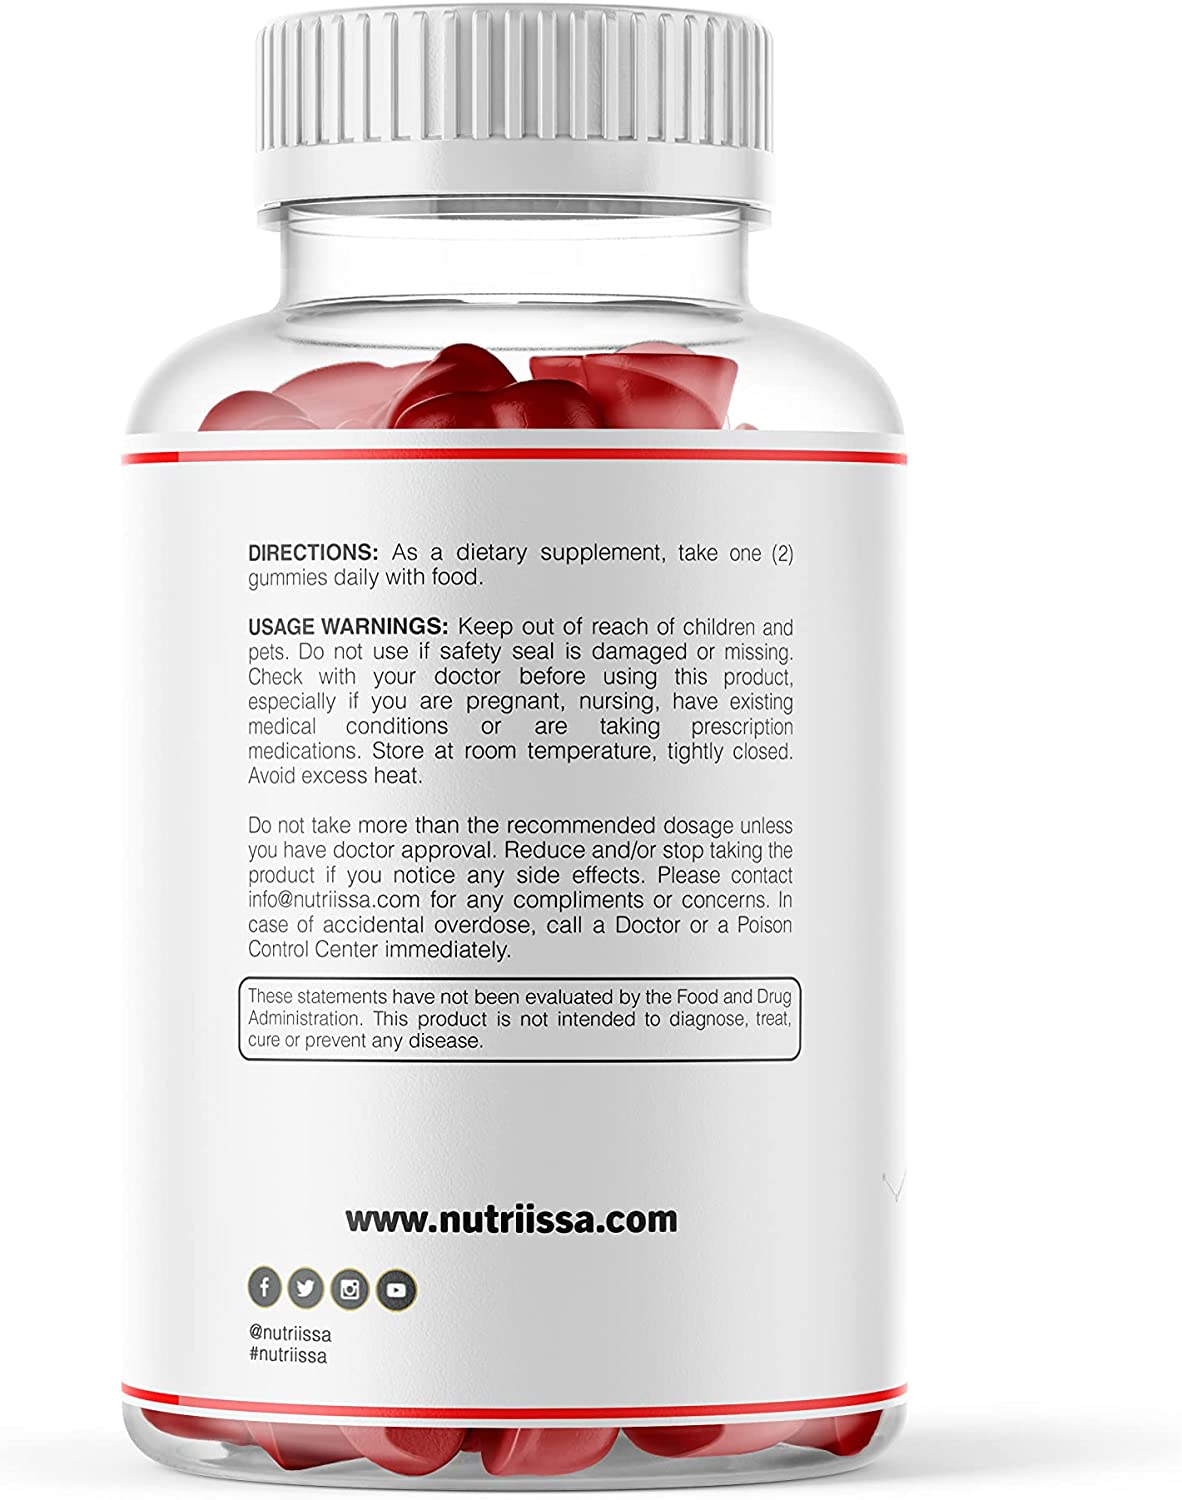 TUDCA Gummies 1000mg – Premium Tauroursodeoxycholic Acid for Liver Support